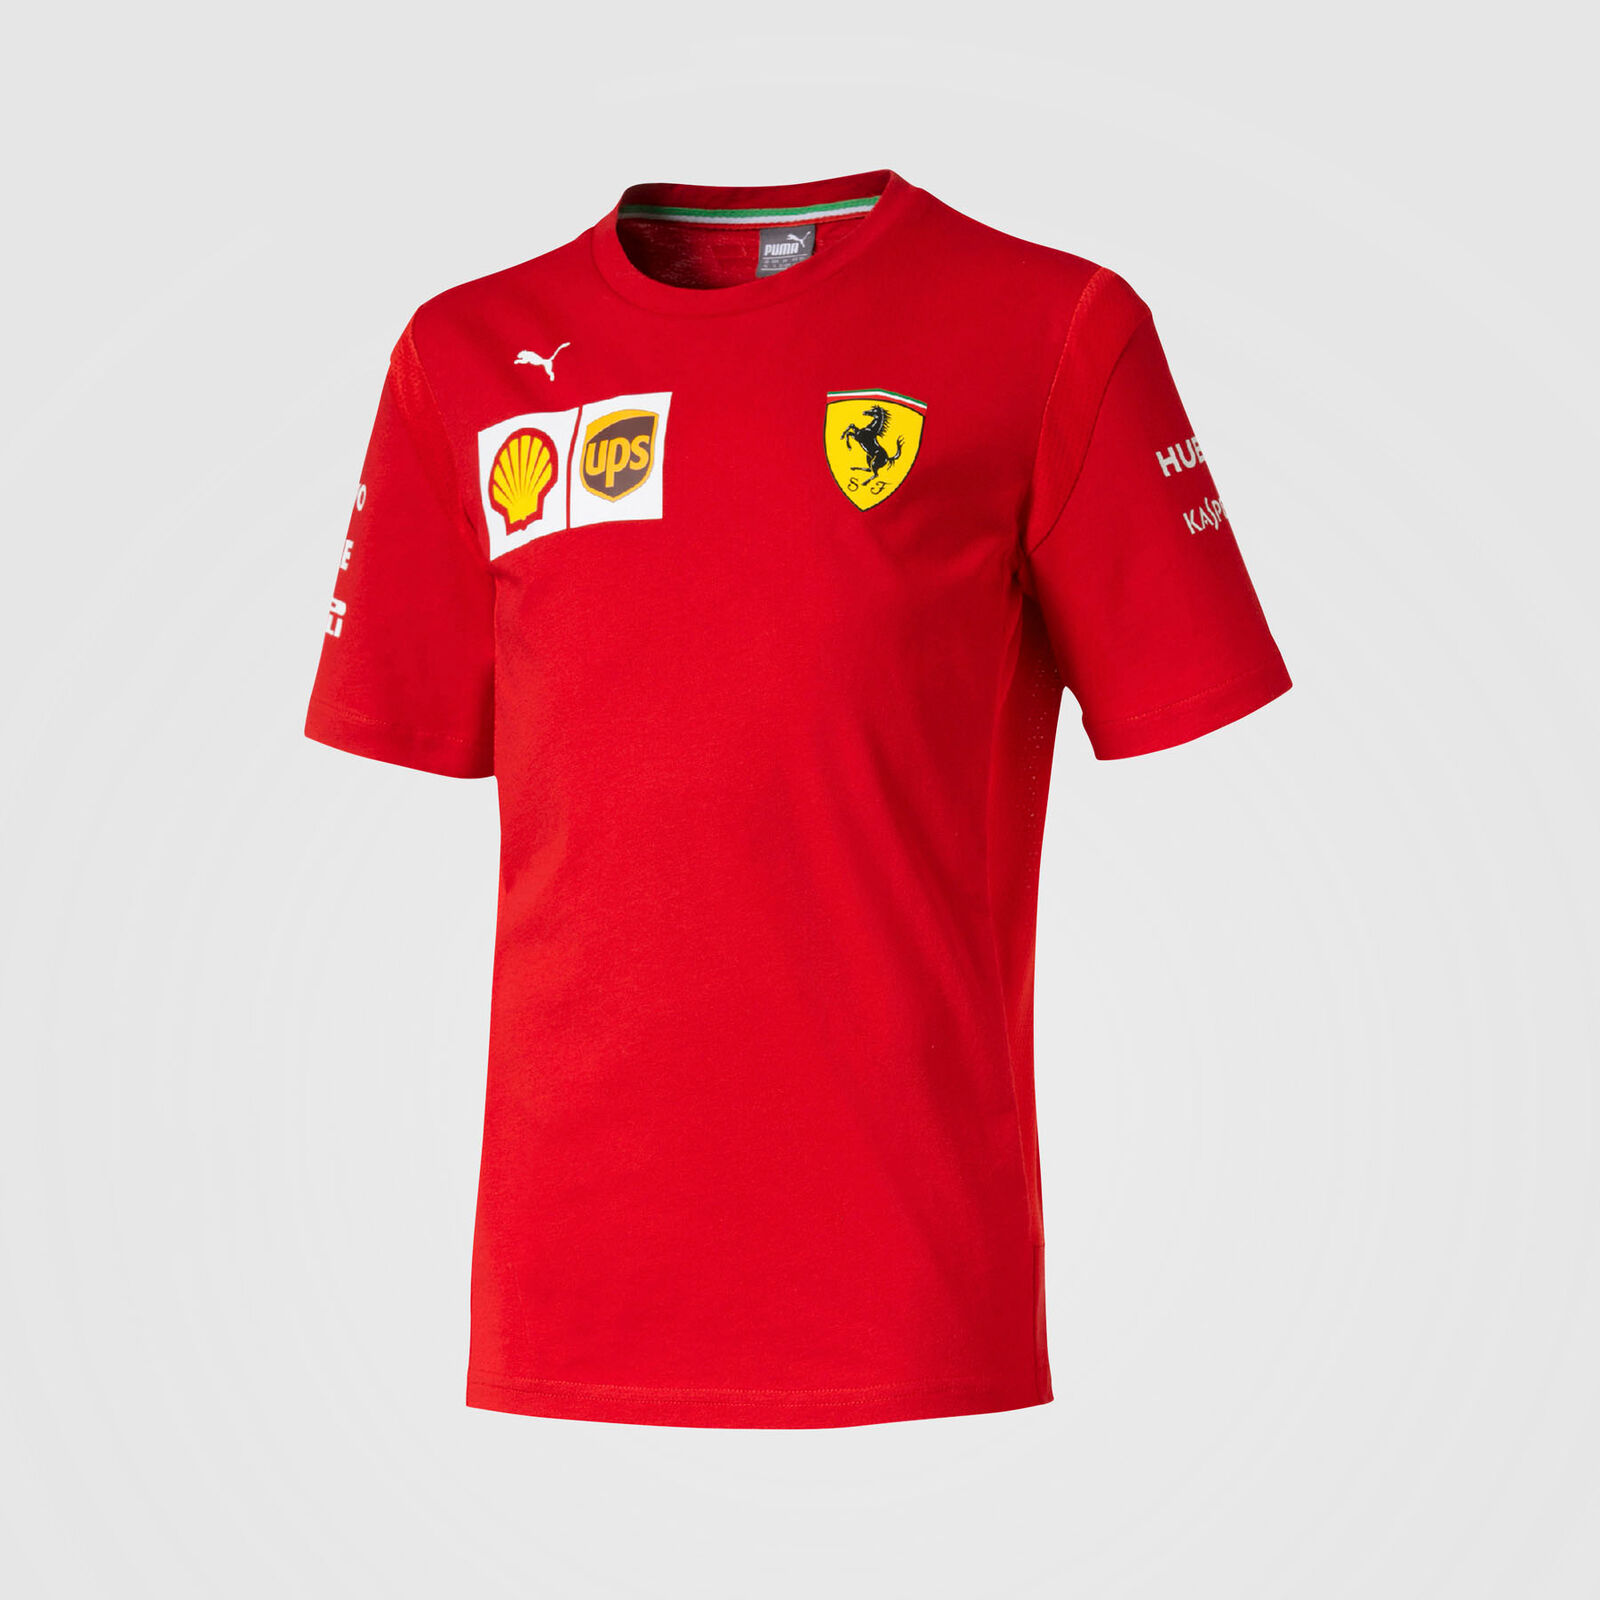 Kids 2019 Team T-Shirt - Scuderia Ferrari | Fuel For Fans